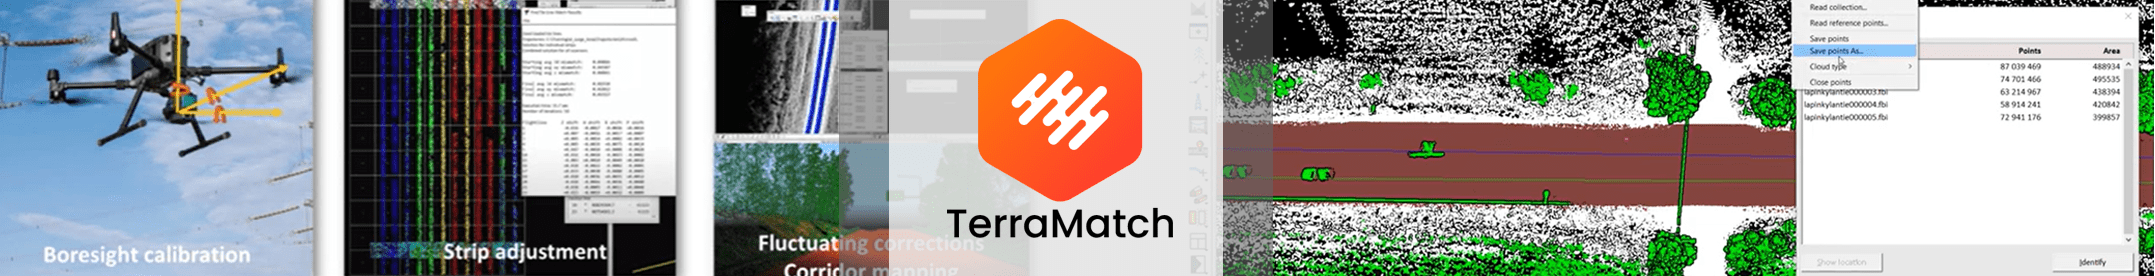 TerraMatch